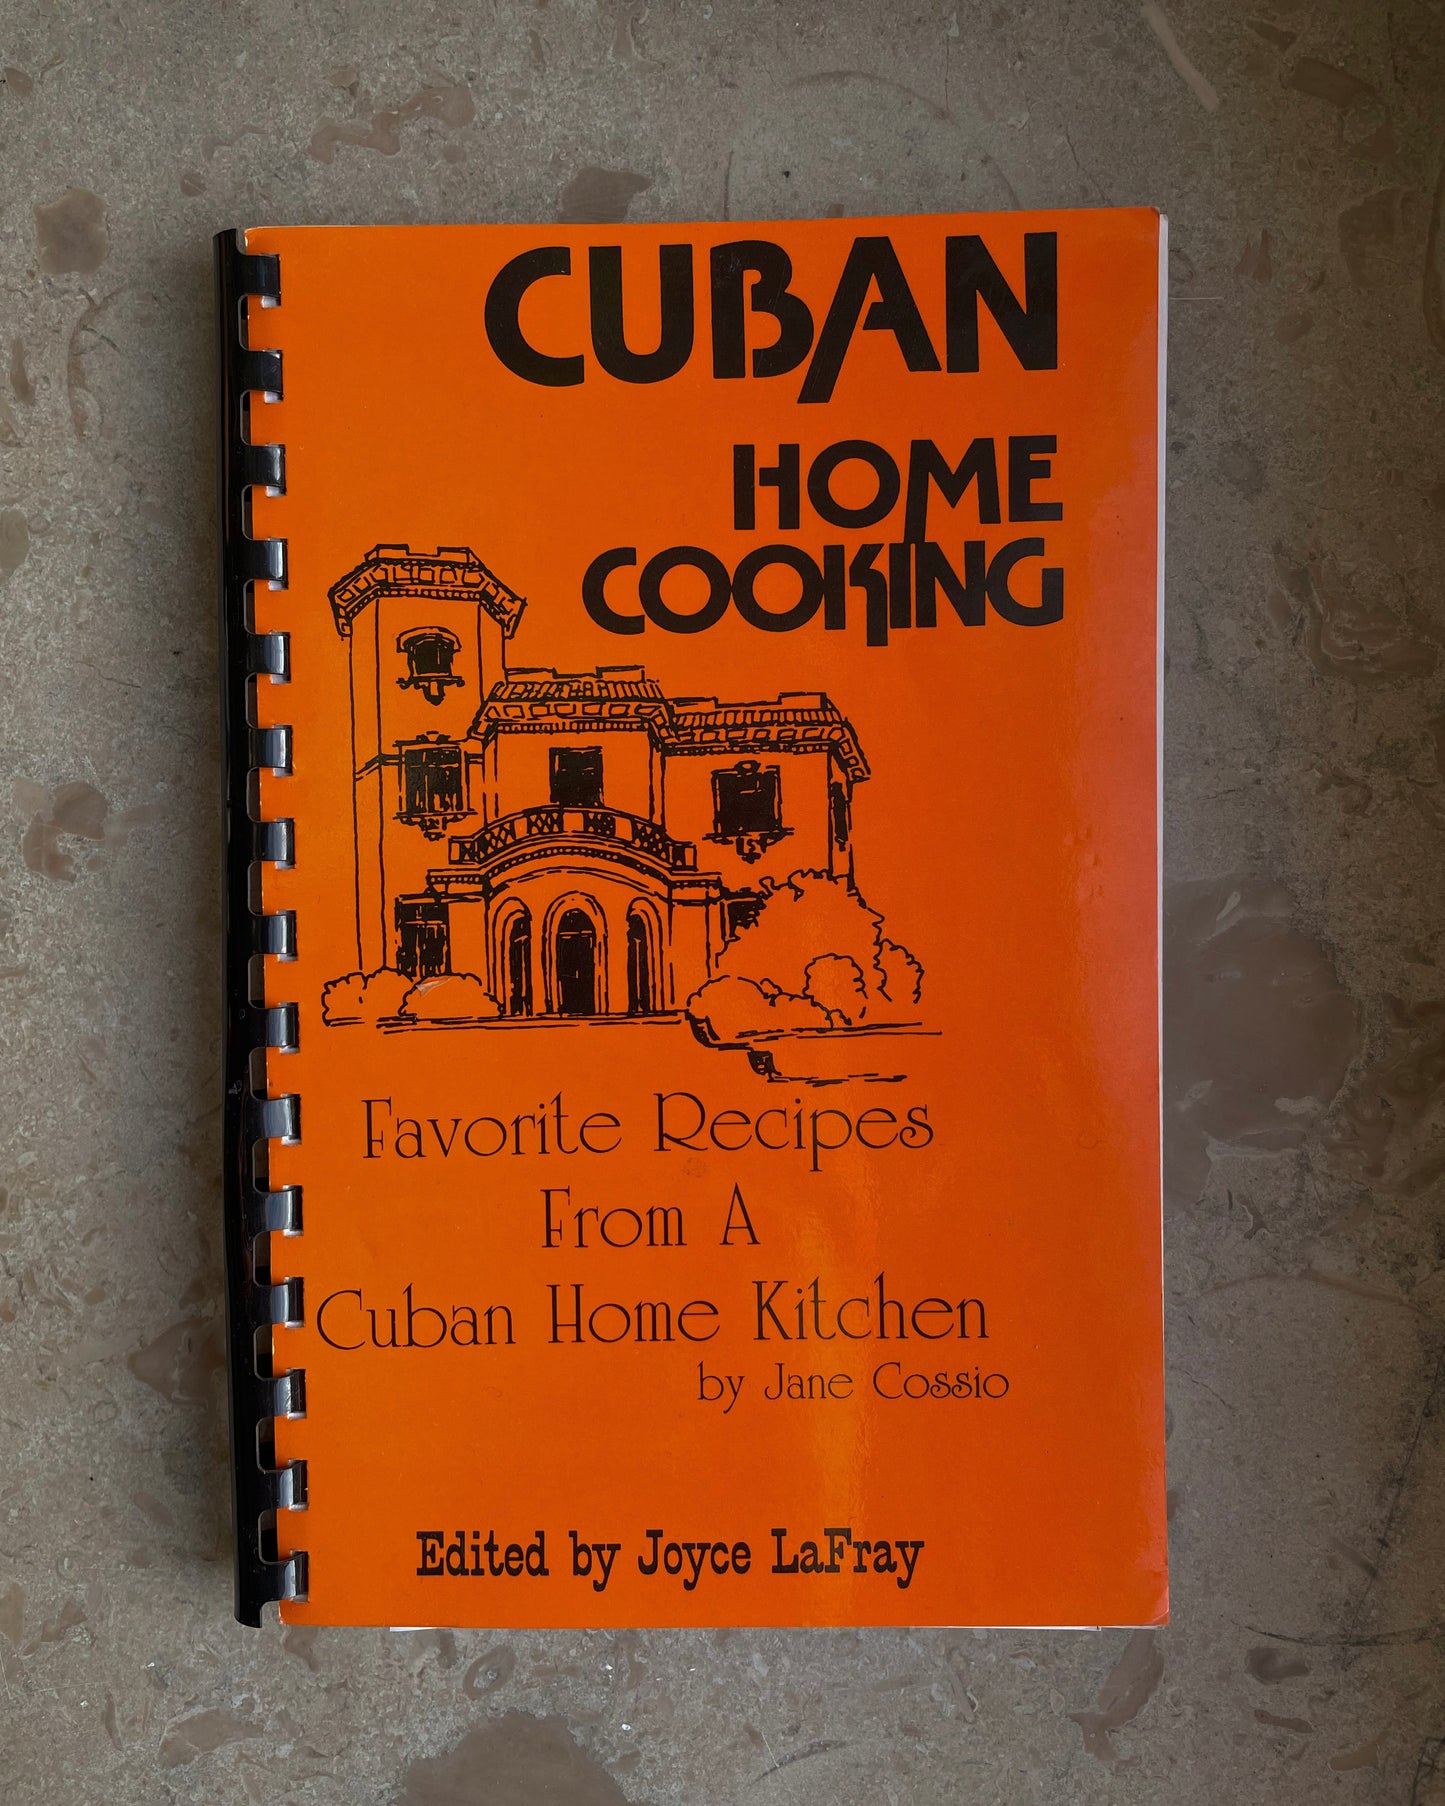 Vintage Cookbook “Cuban Home Cooking” 1996